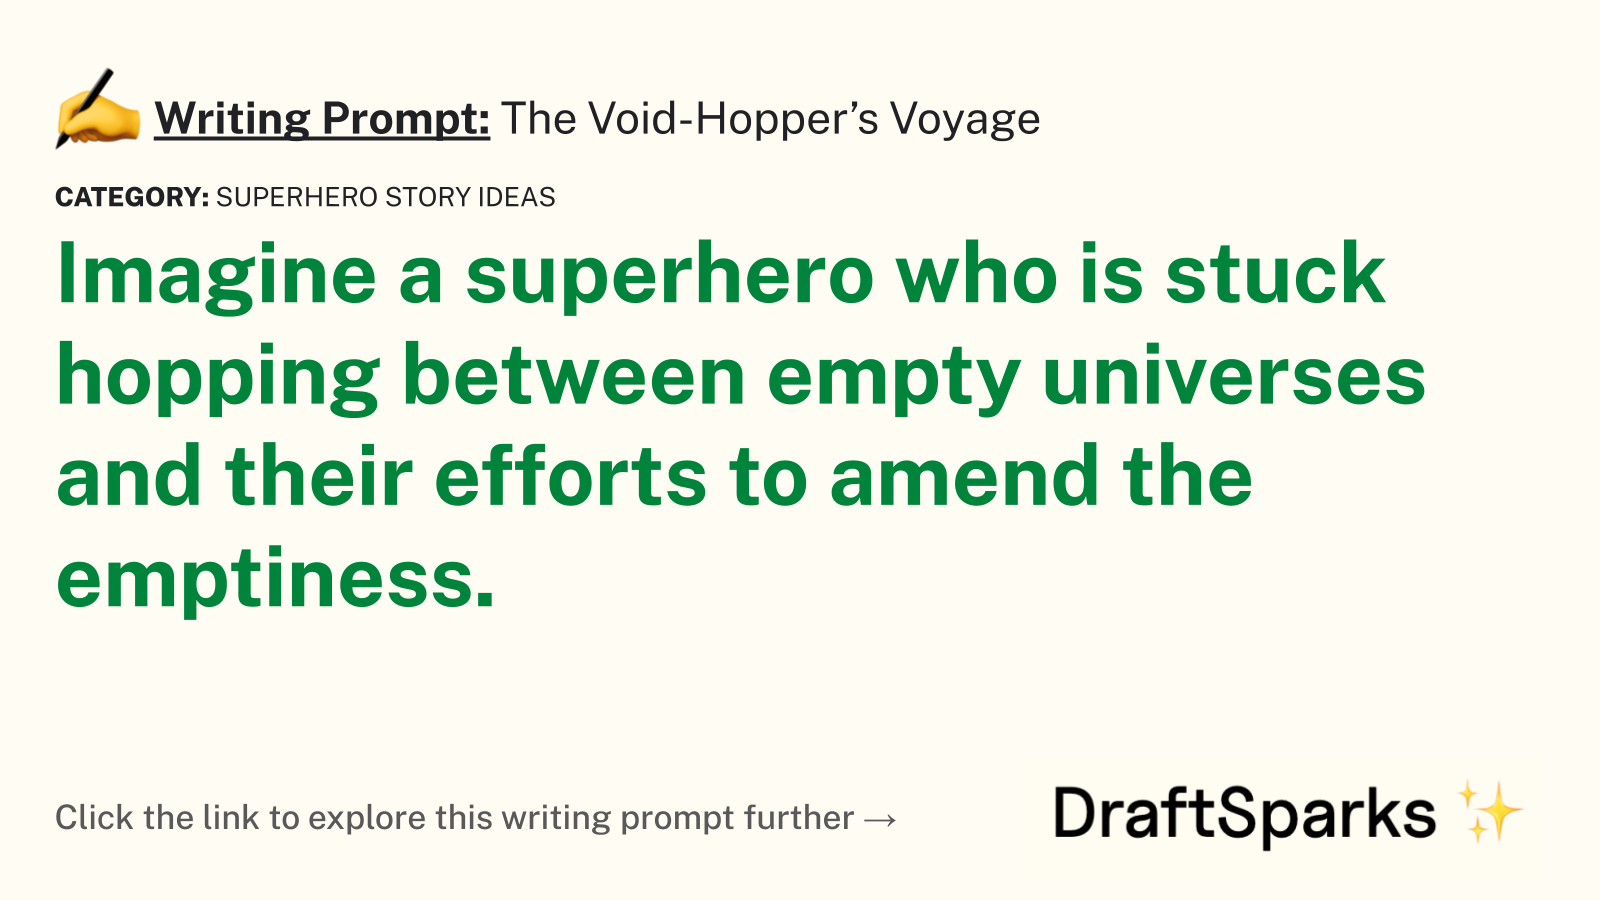 The Void-Hopper’s Voyage